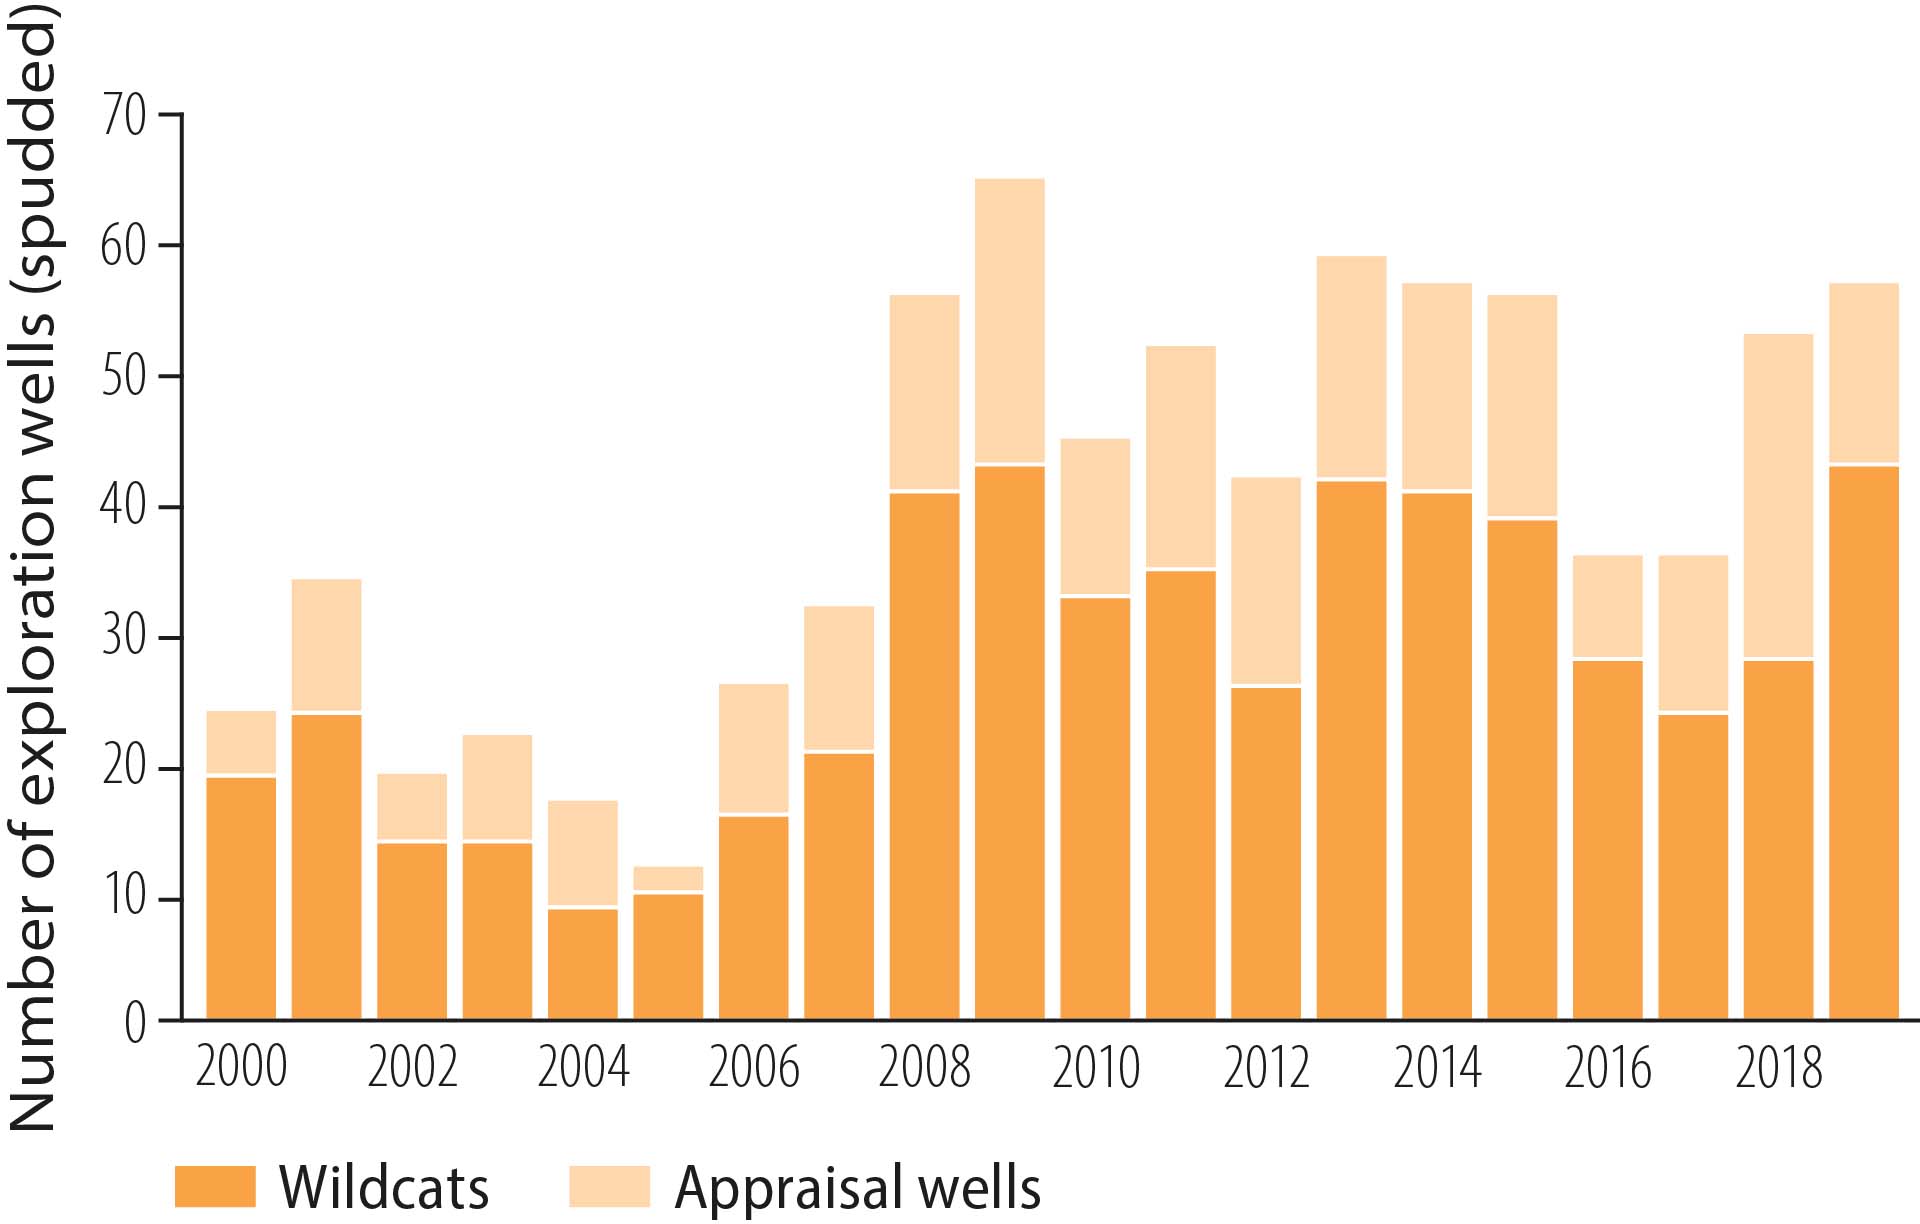 Figure 4.1 Wildcats and appraisal wells, 2000-19